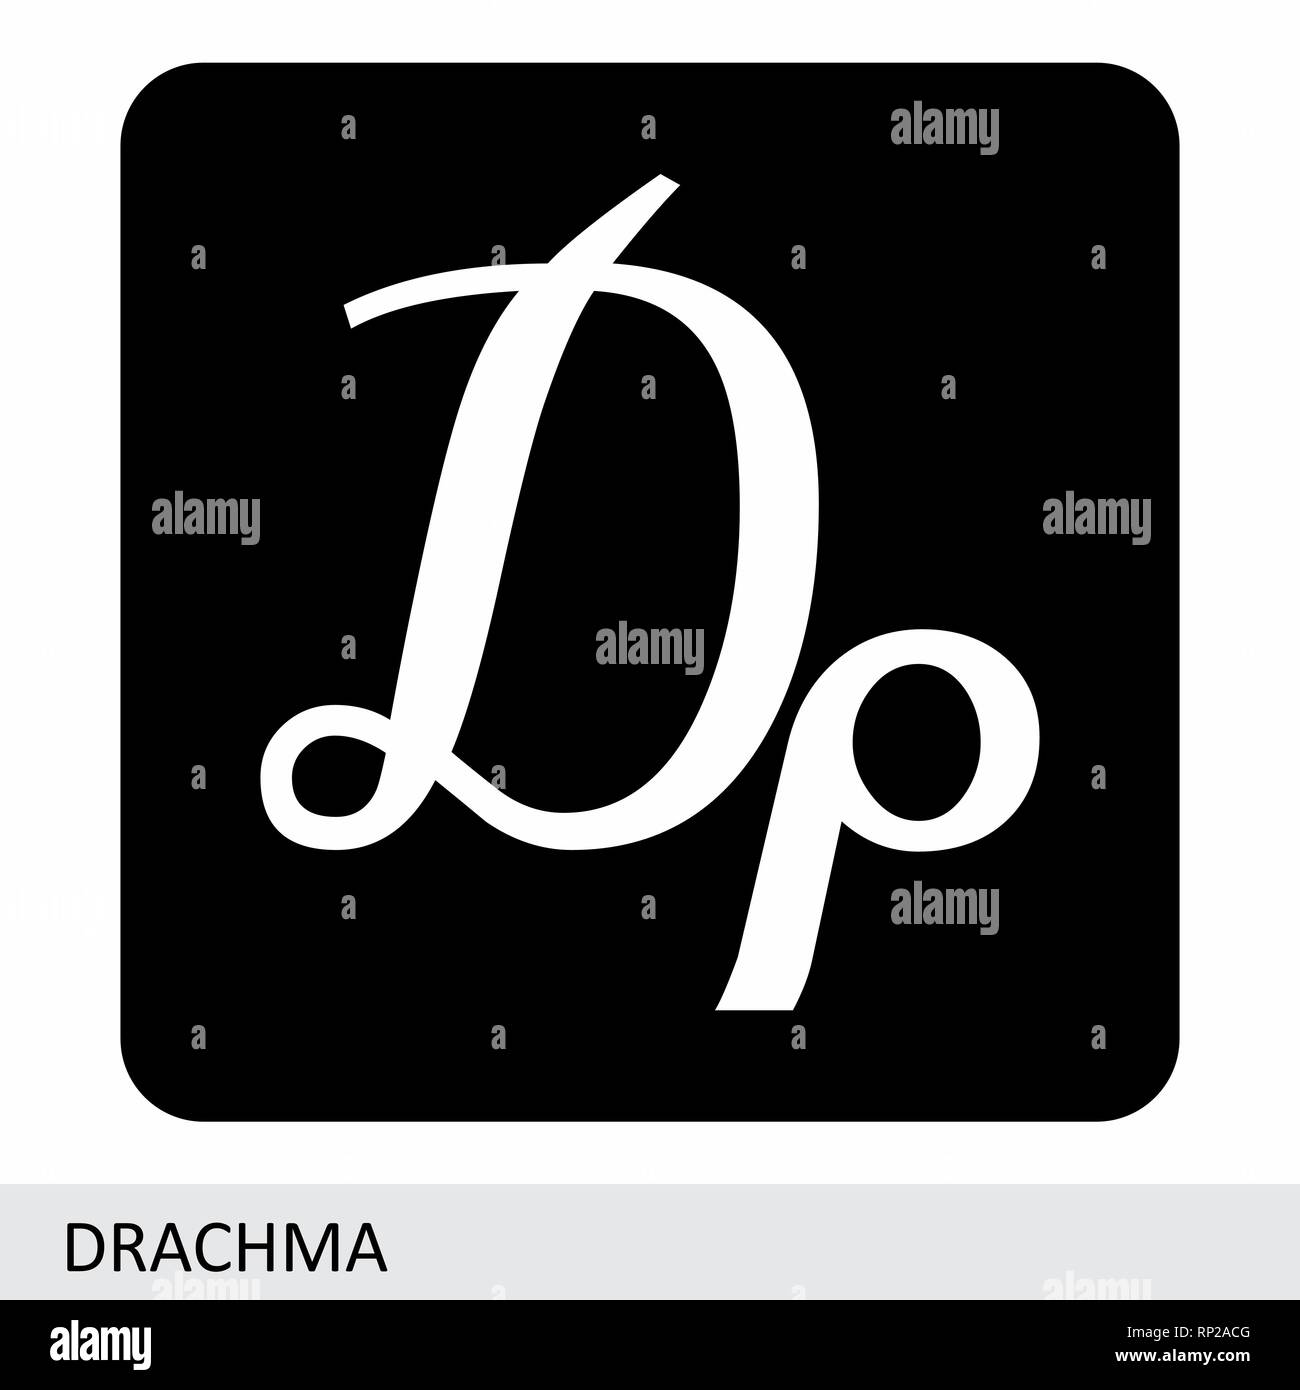 Drachma currency symbol Stock Vector